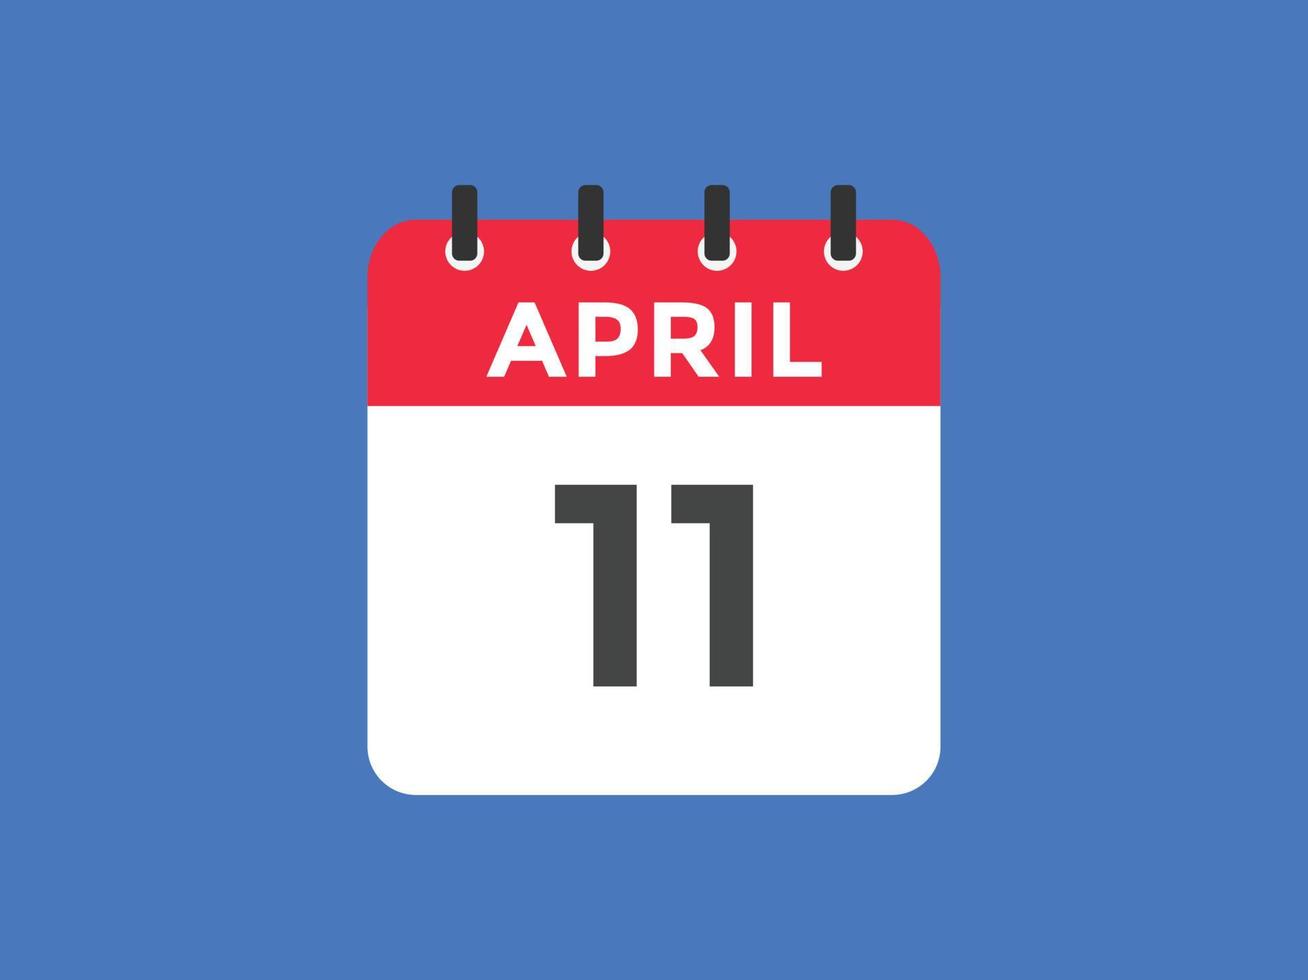 april 11 kalender påminnelse. 11th april dagligen kalender ikon mall. kalender 11th april ikon design mall. vektor illustration